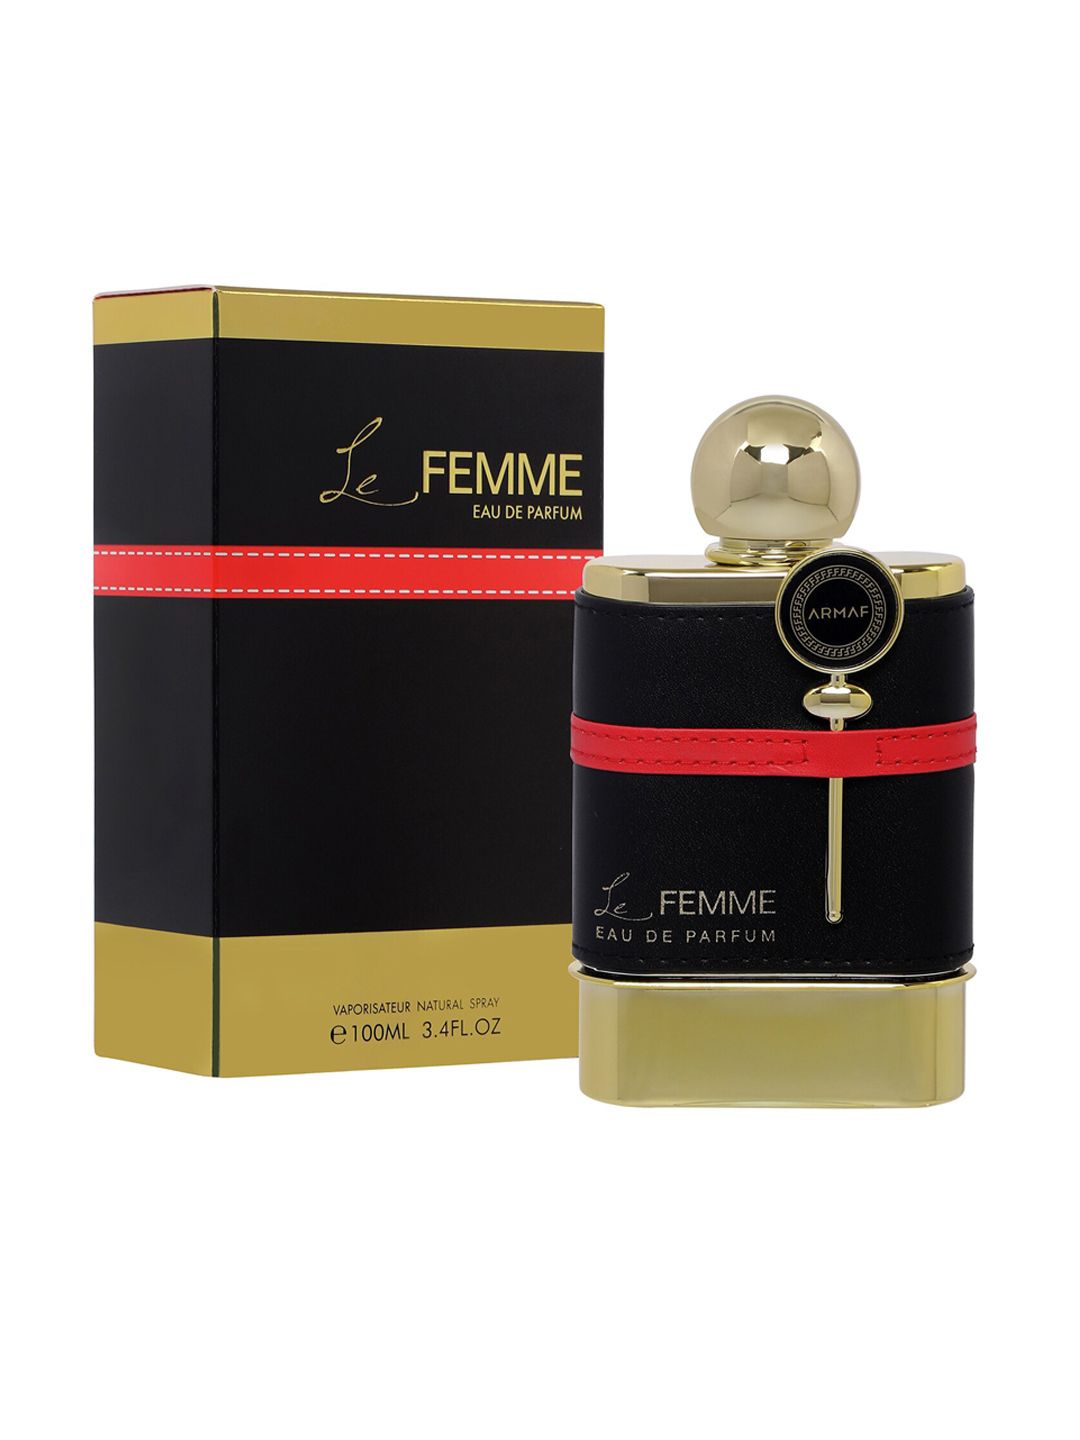 Armaf Le Femme Eau De Parfum - 100 ml Price in India